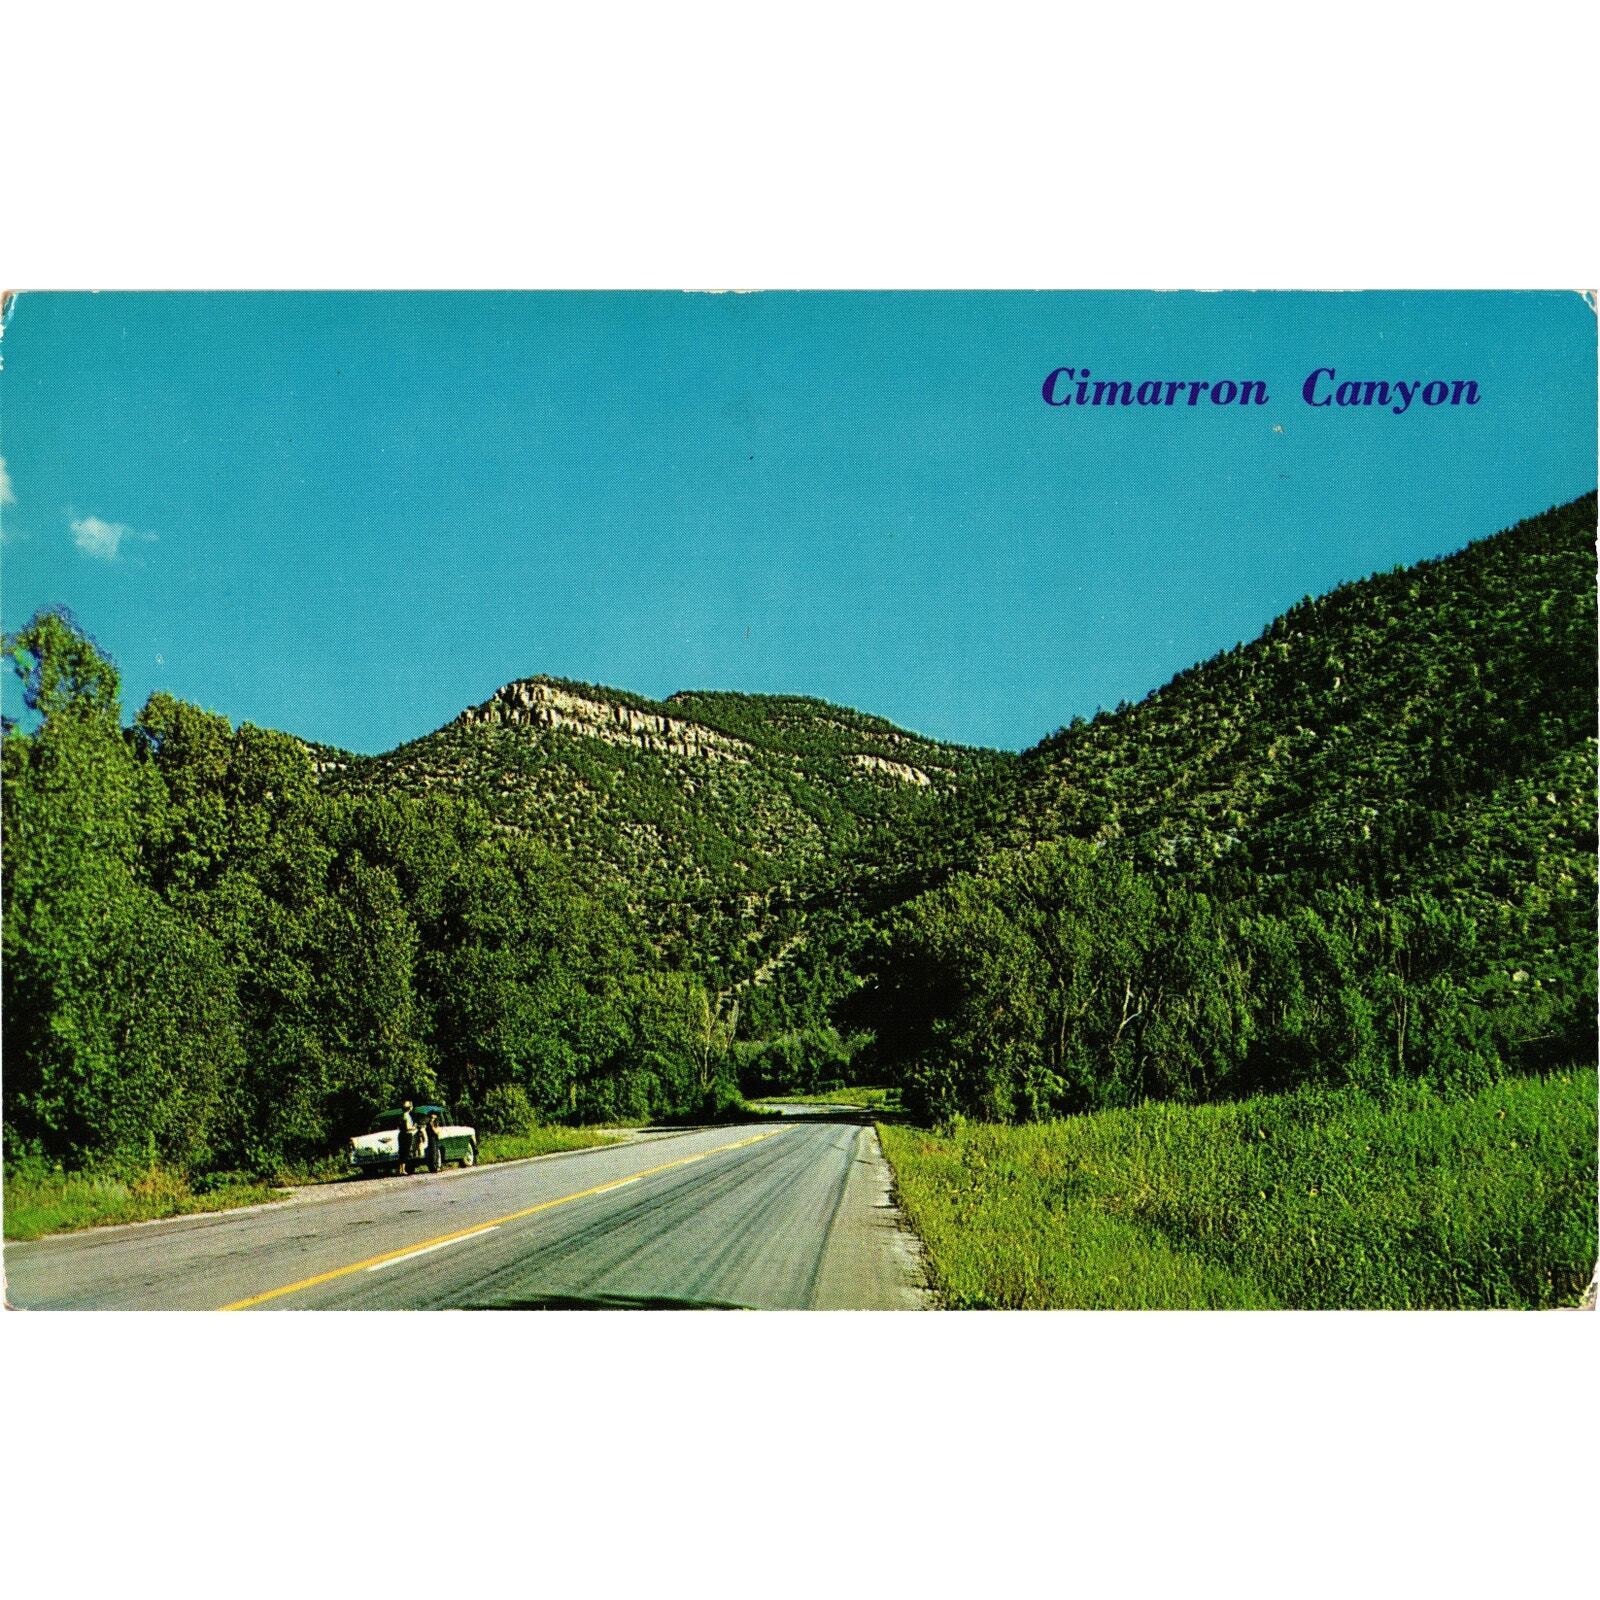 Cimarron Canyon New Mexico Postcard Classic Car View Gram Unposted